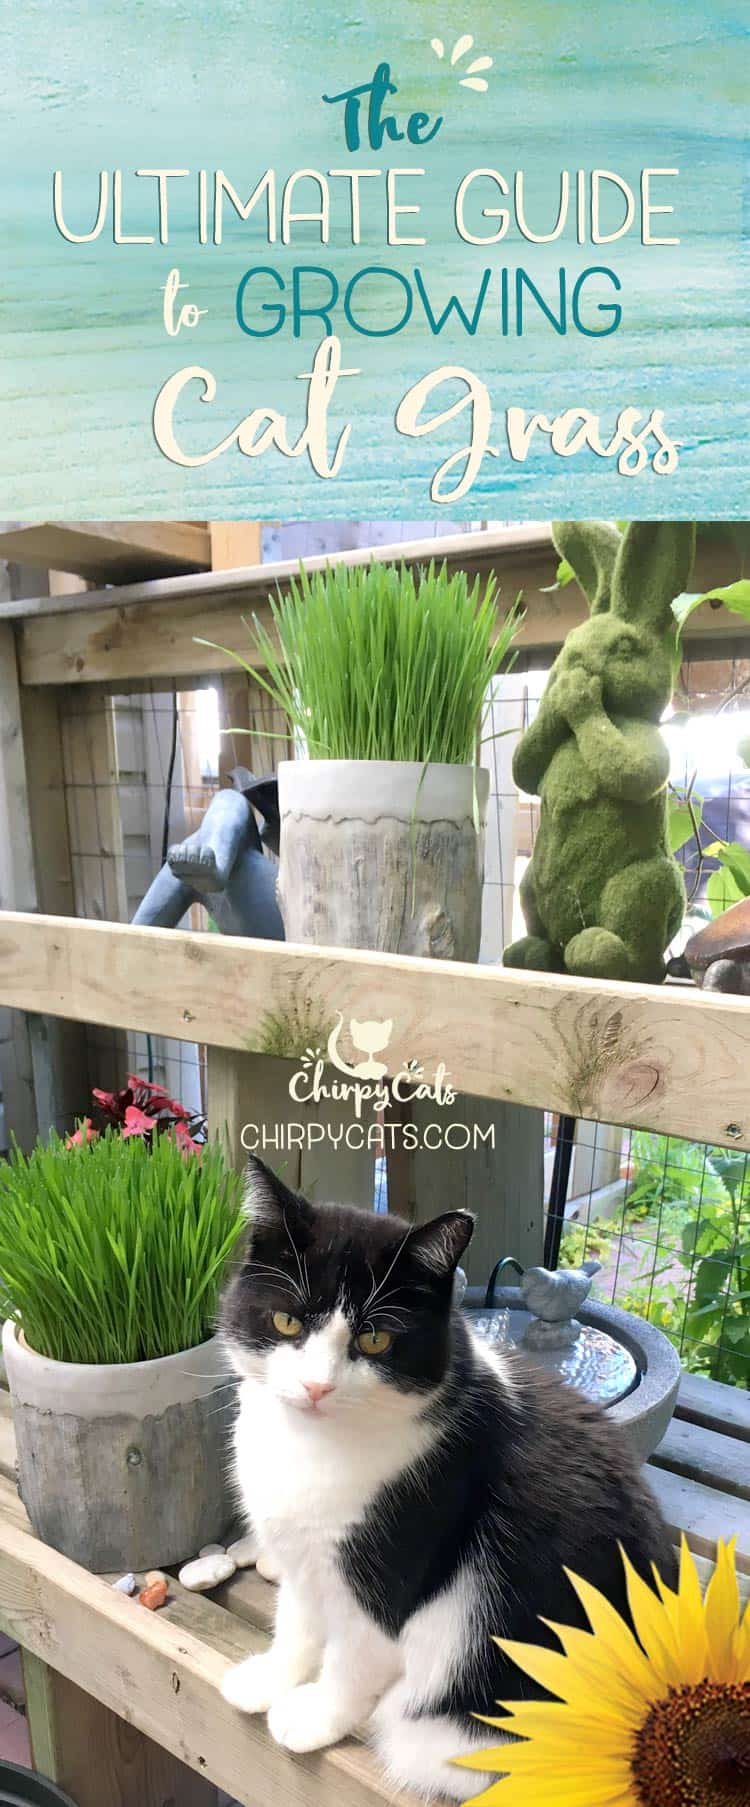 How to grow cat grass indoors